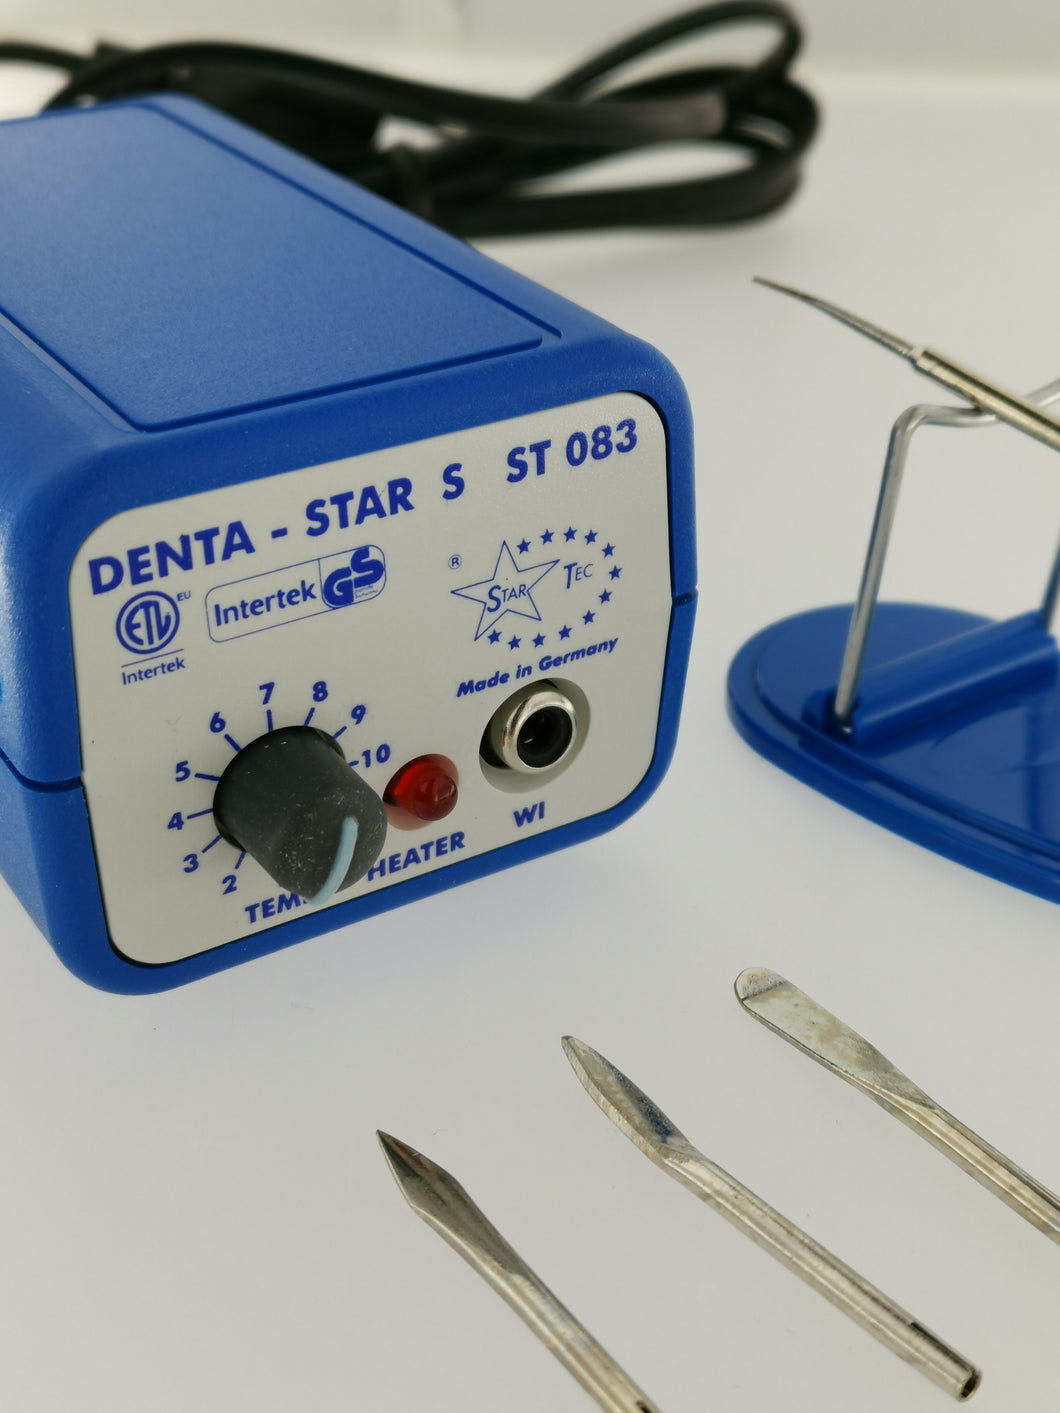 Intertek Denta-Star ST083 vaško modeliavimo aparatas, visas komplektas